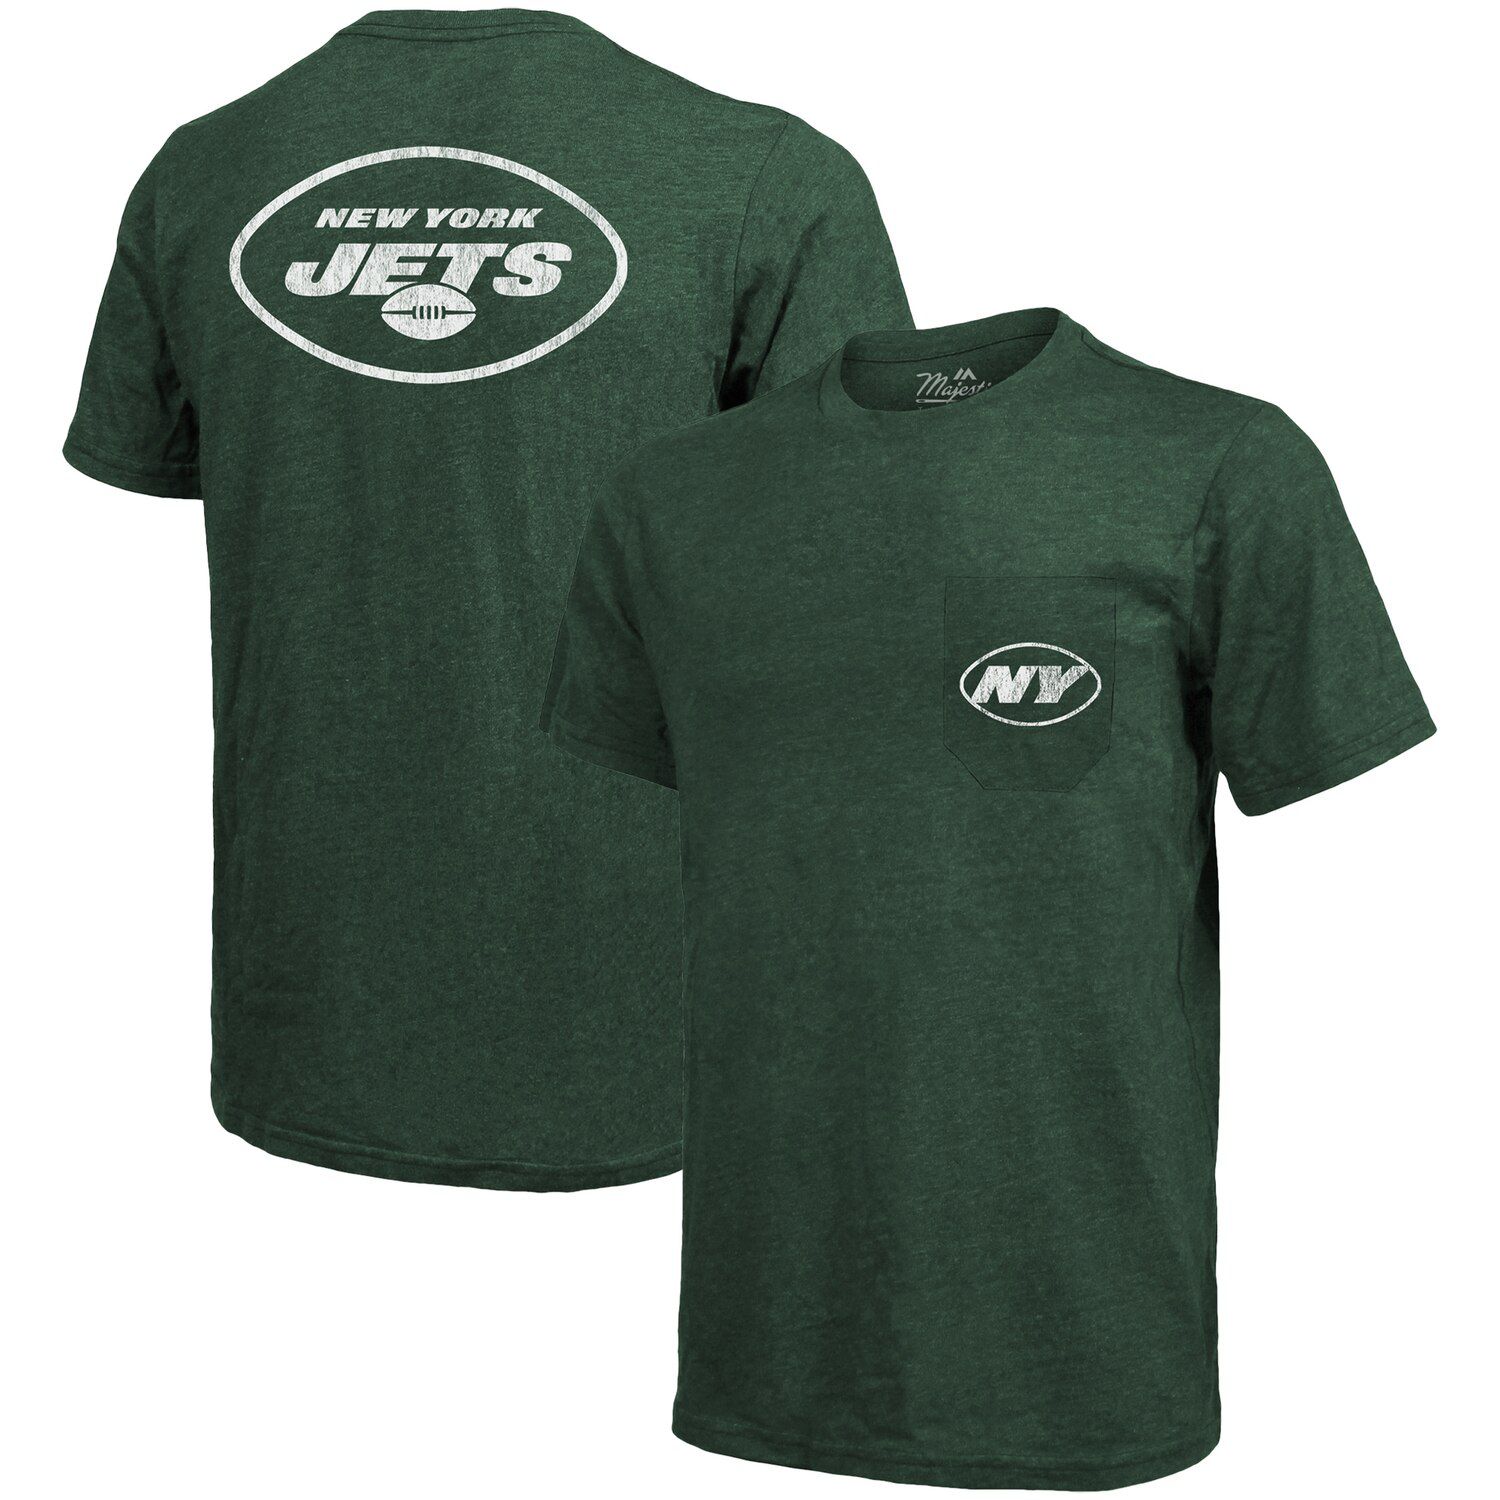 Футболка с карманами Tri-Blend New York Jets Threads — меланжево-зеленый Majestic футболка с карманами tri blend new york jets threads меланжево зеленый majestic